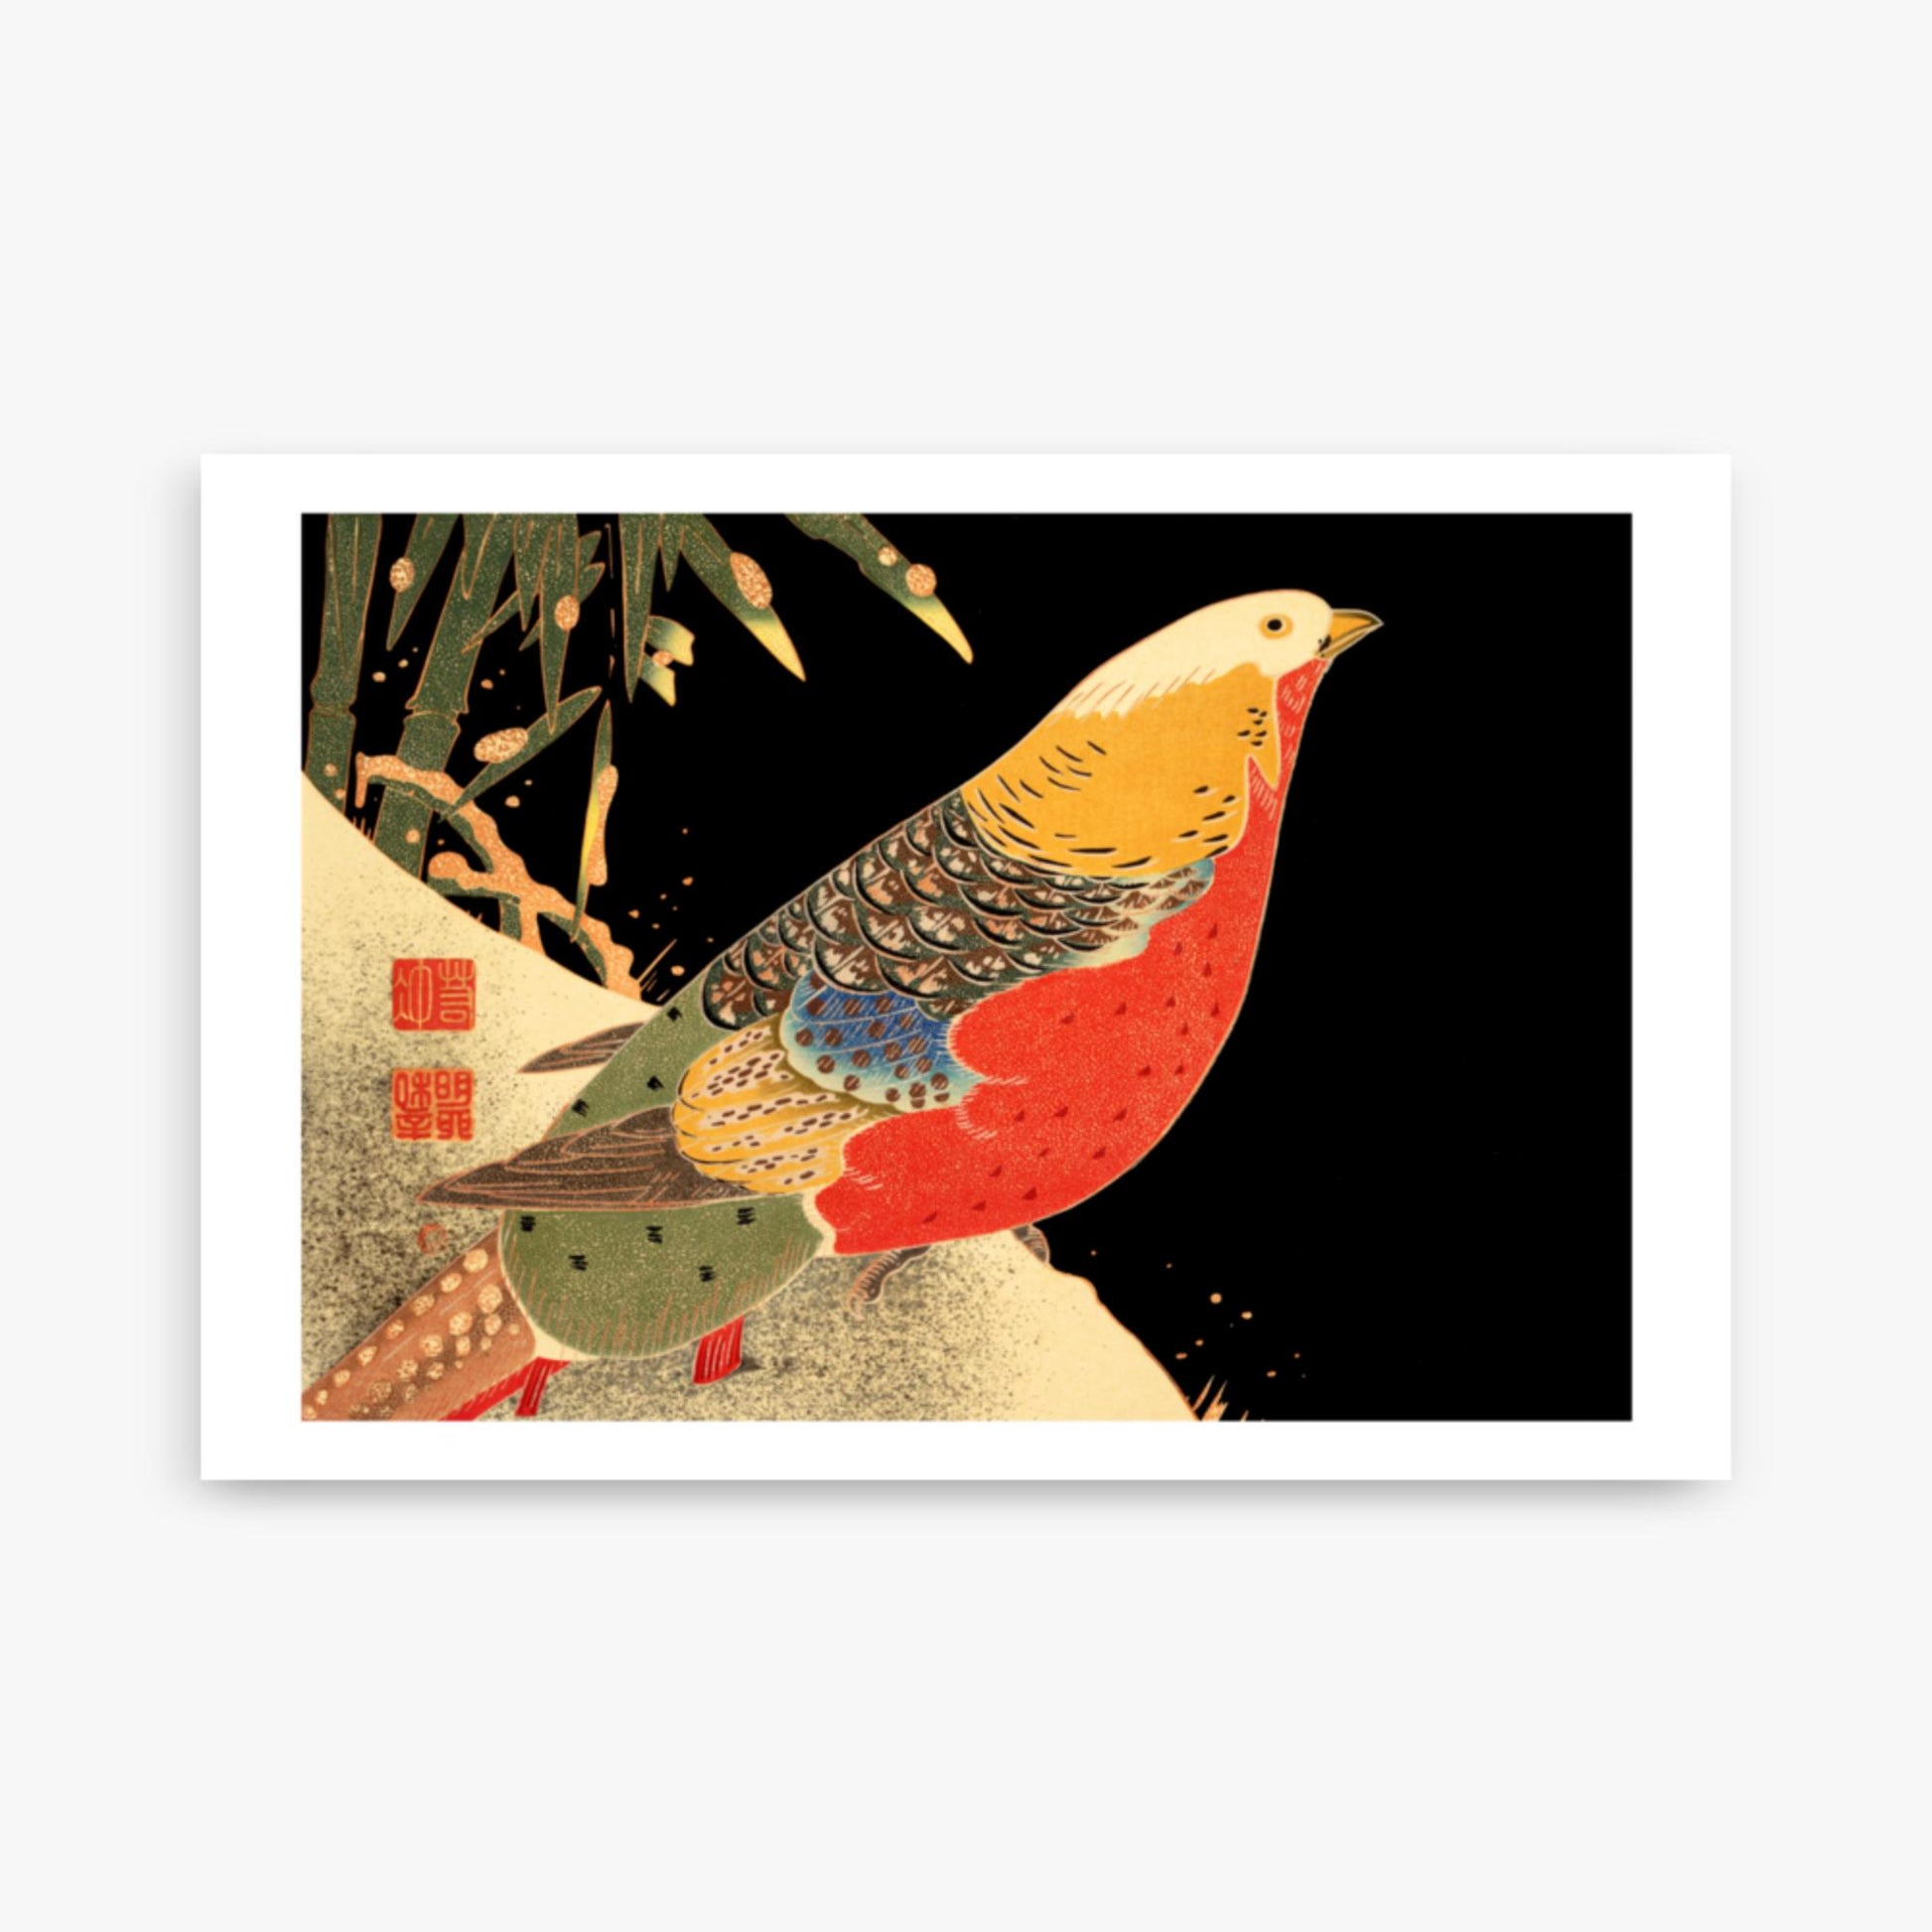 Ito Jakuchu - Golden Pheasant in the Snow 61x91 cm Poster